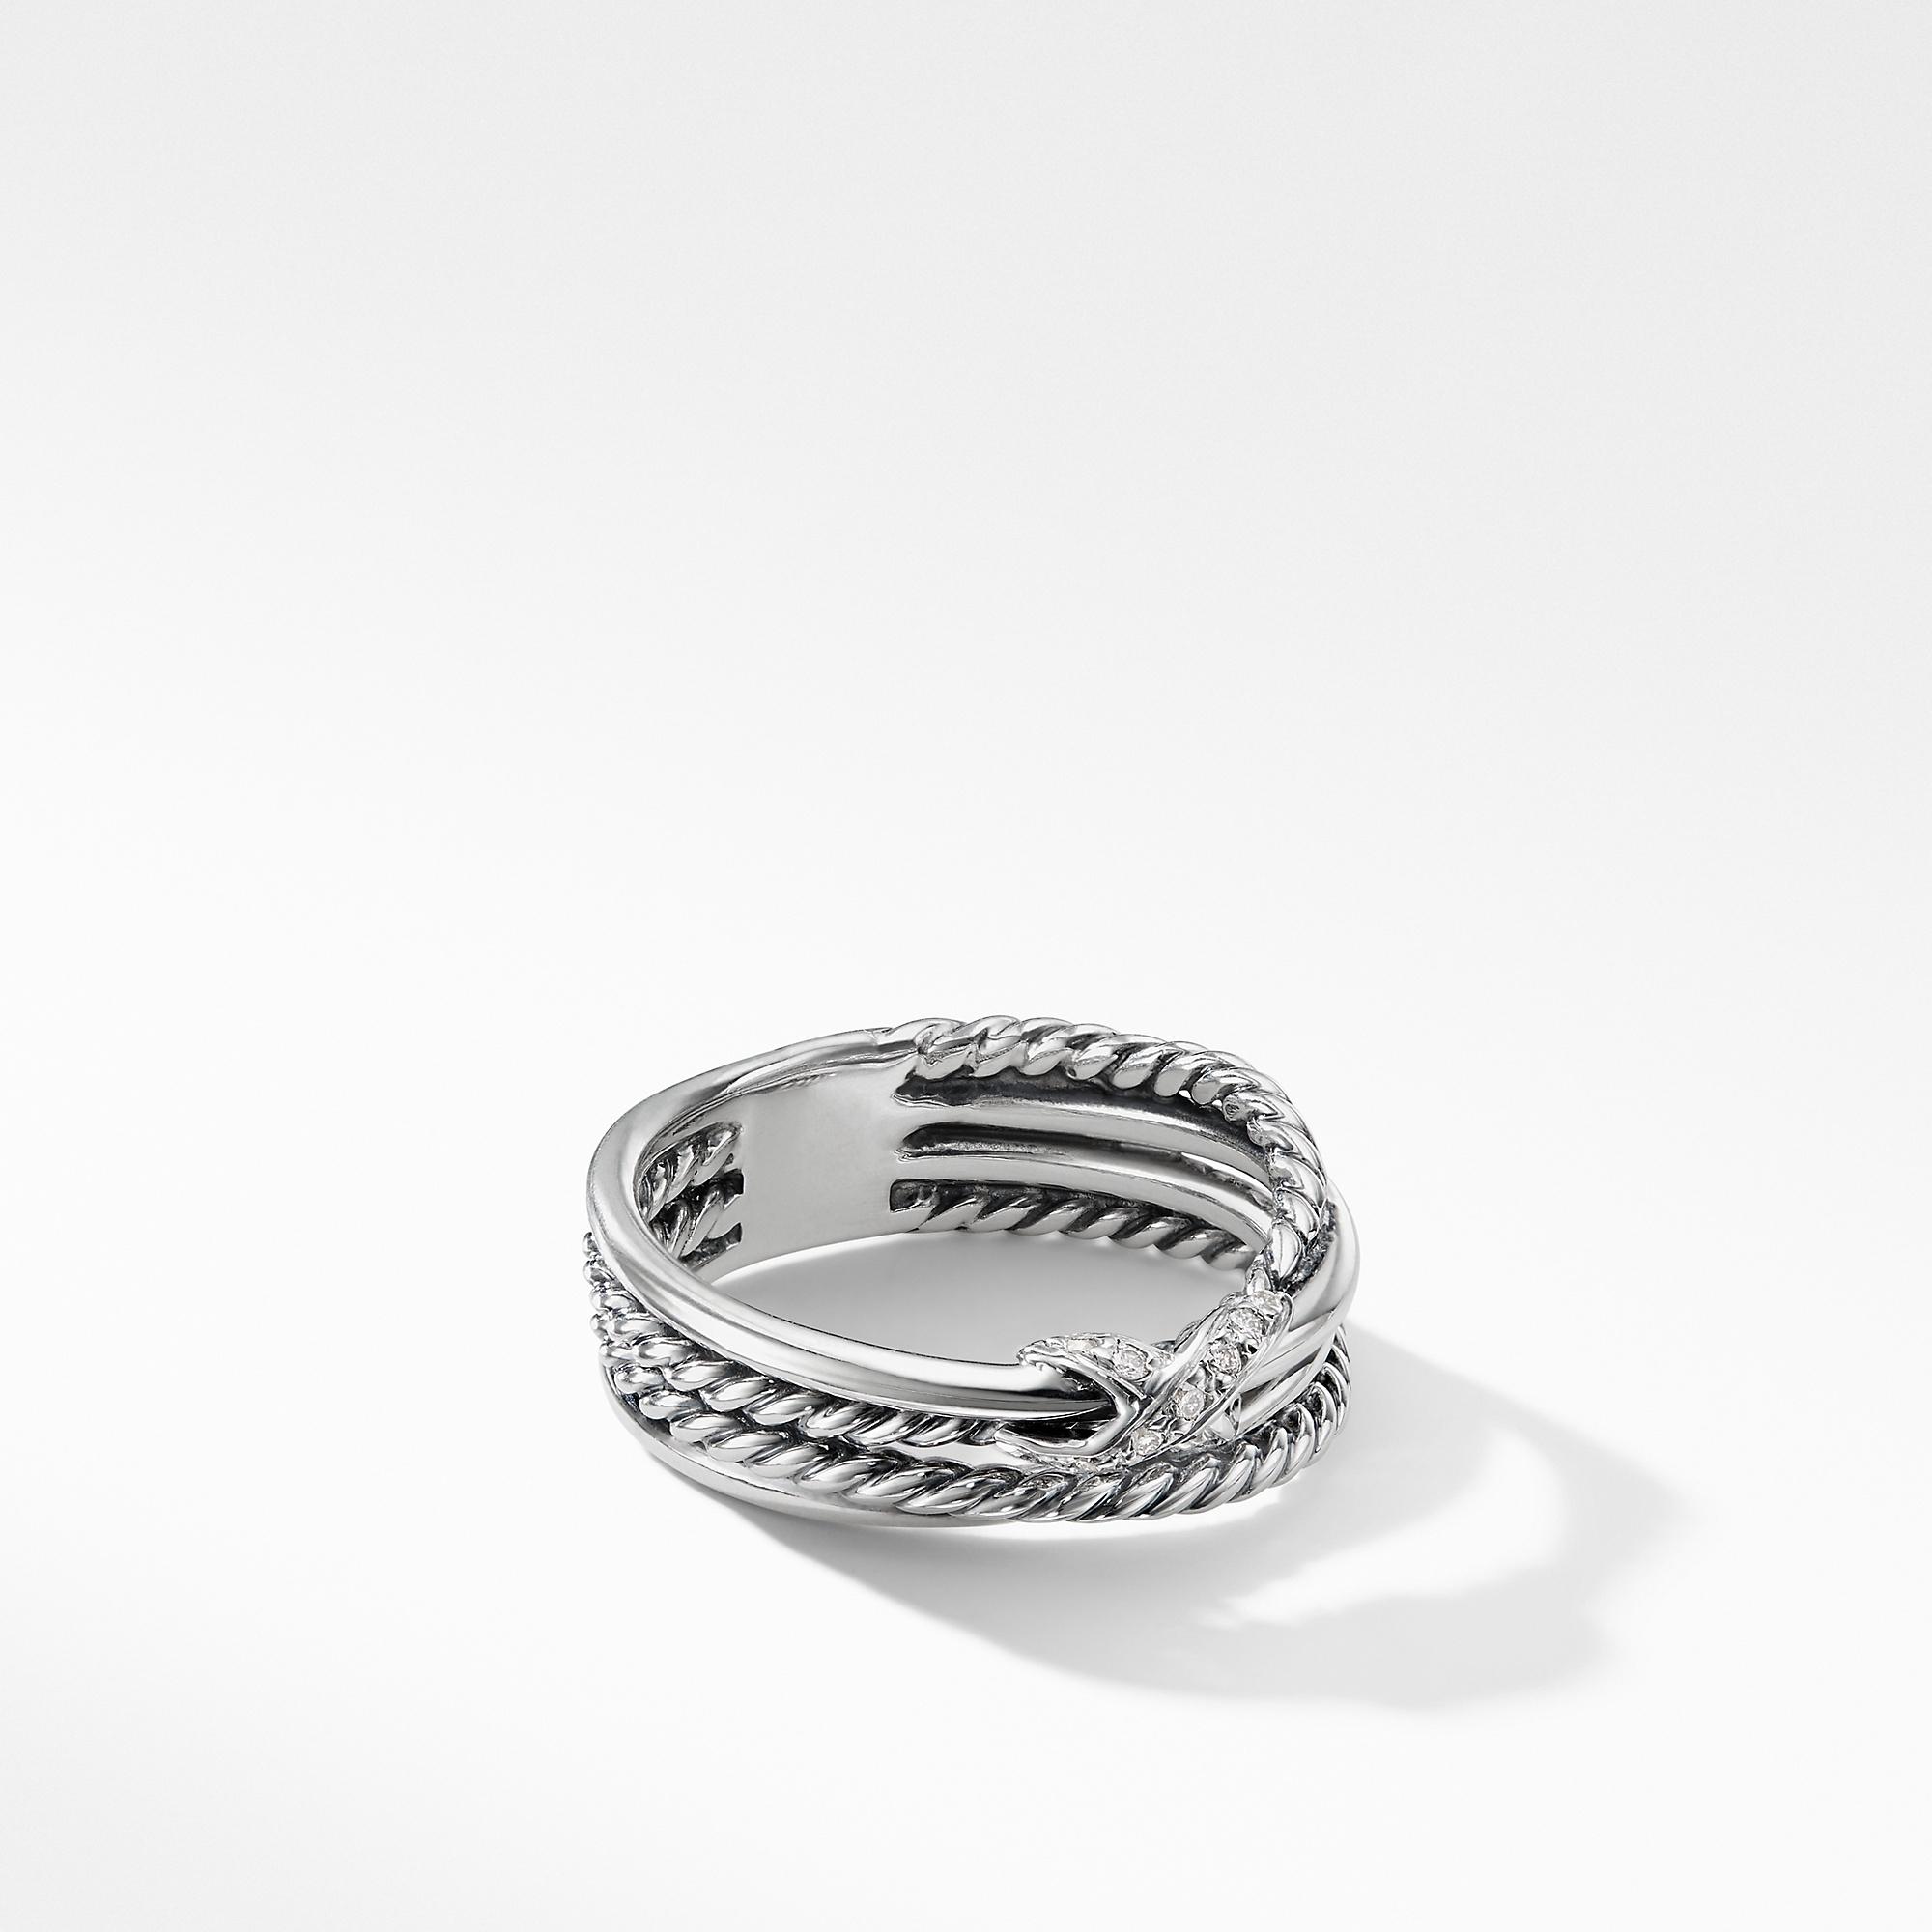 David Yurman X Crossover Ring with Diamonds, size 6